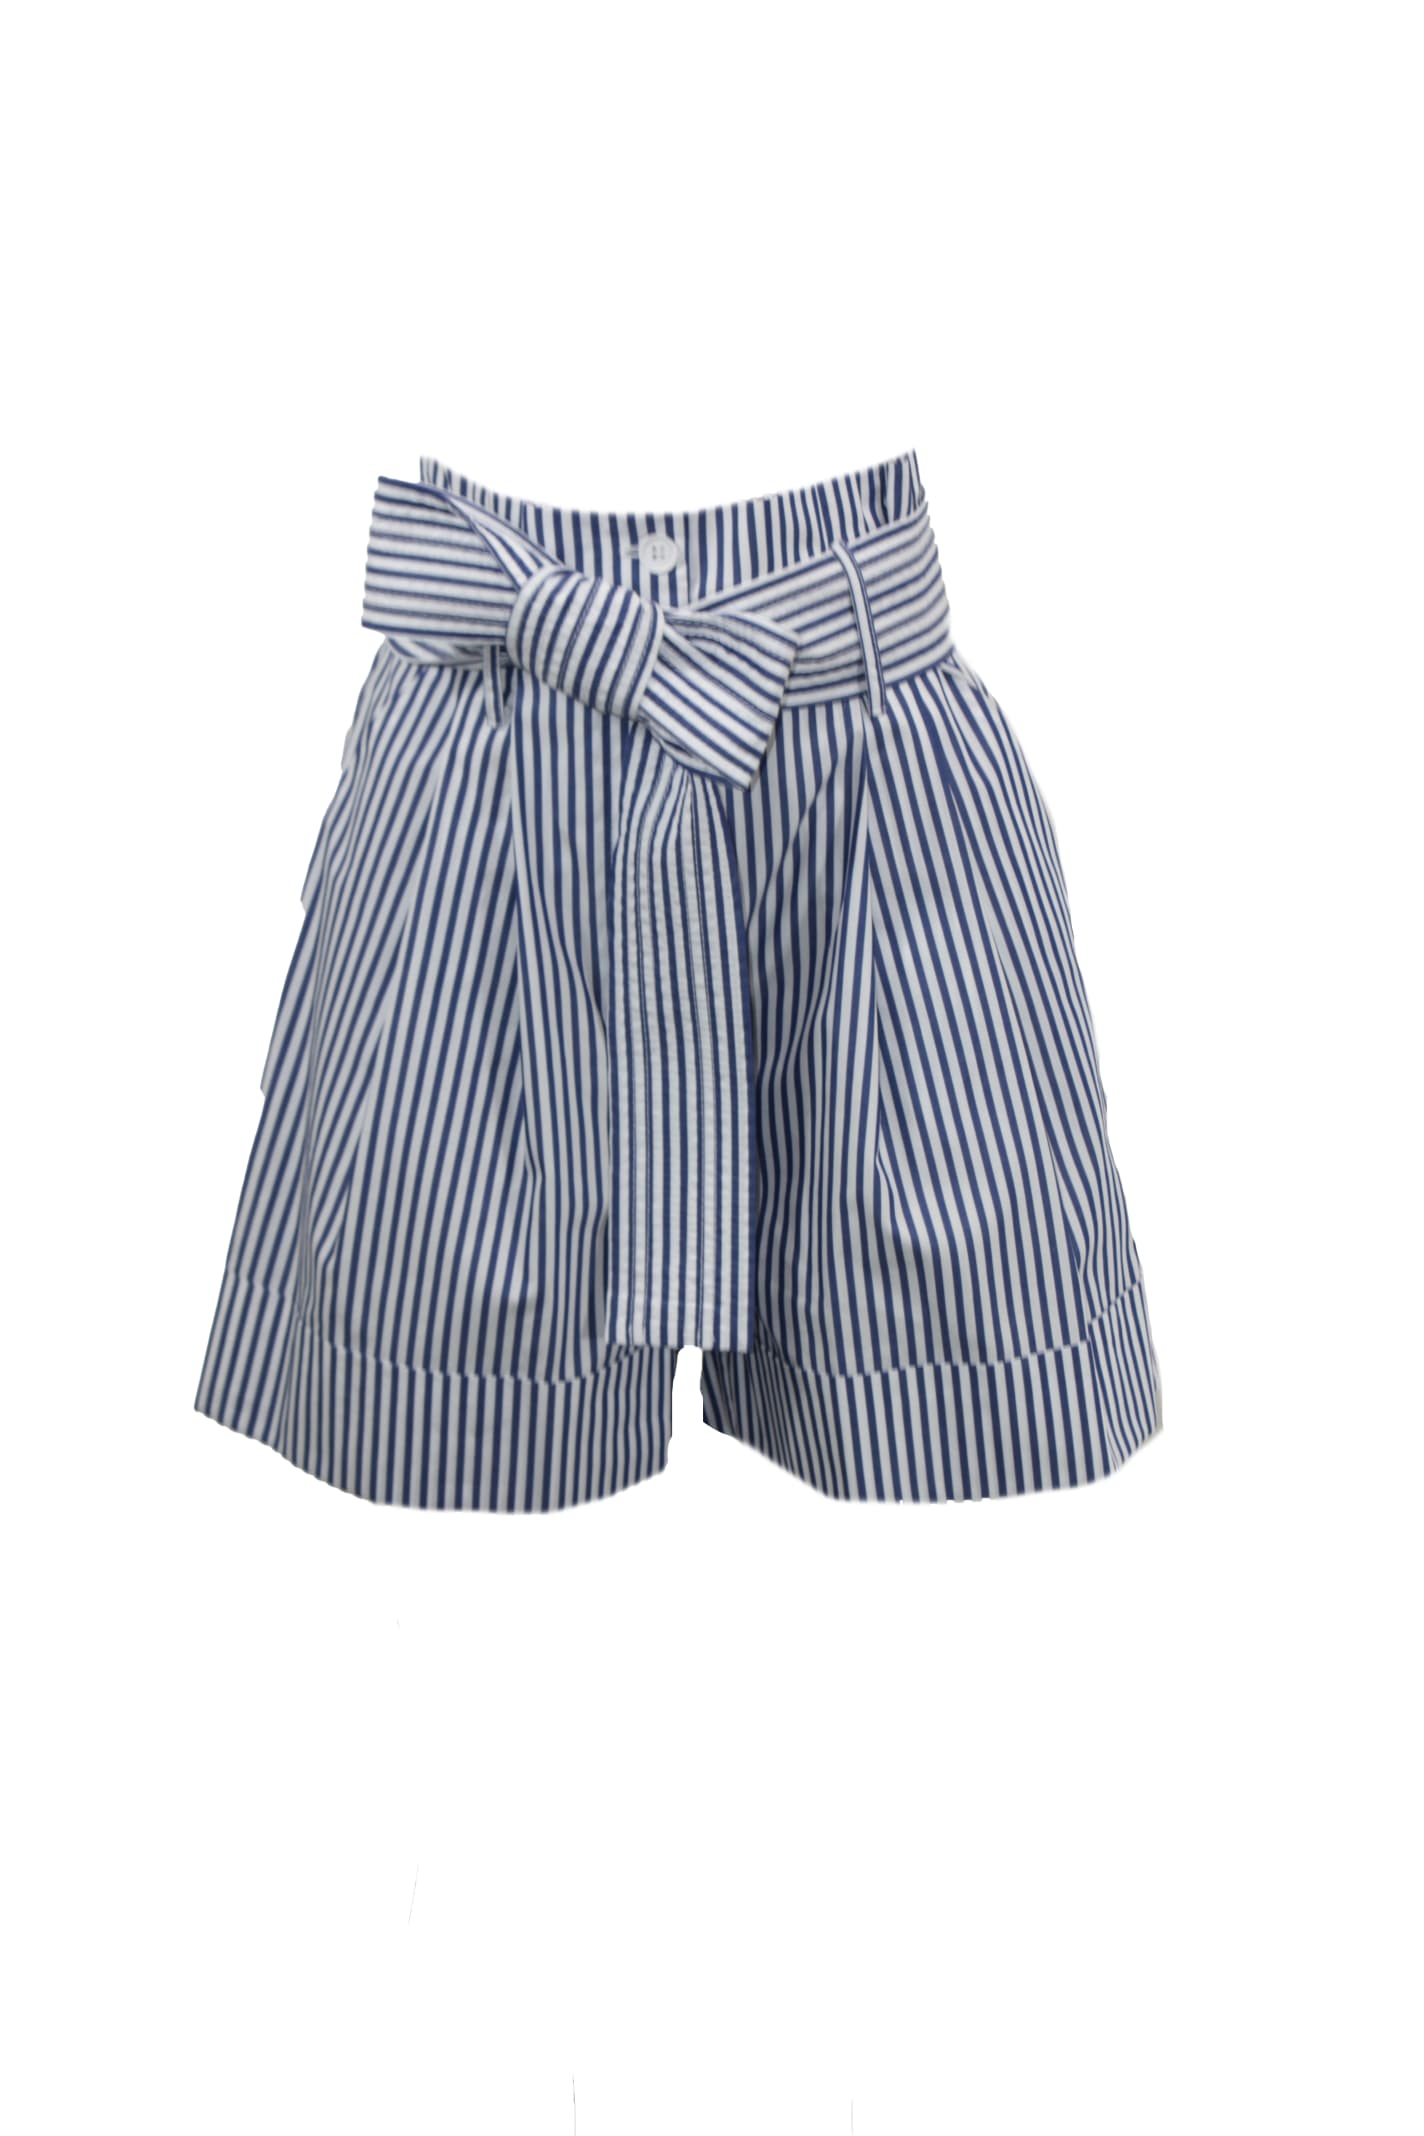 Parosh Cotton Striped Shorts